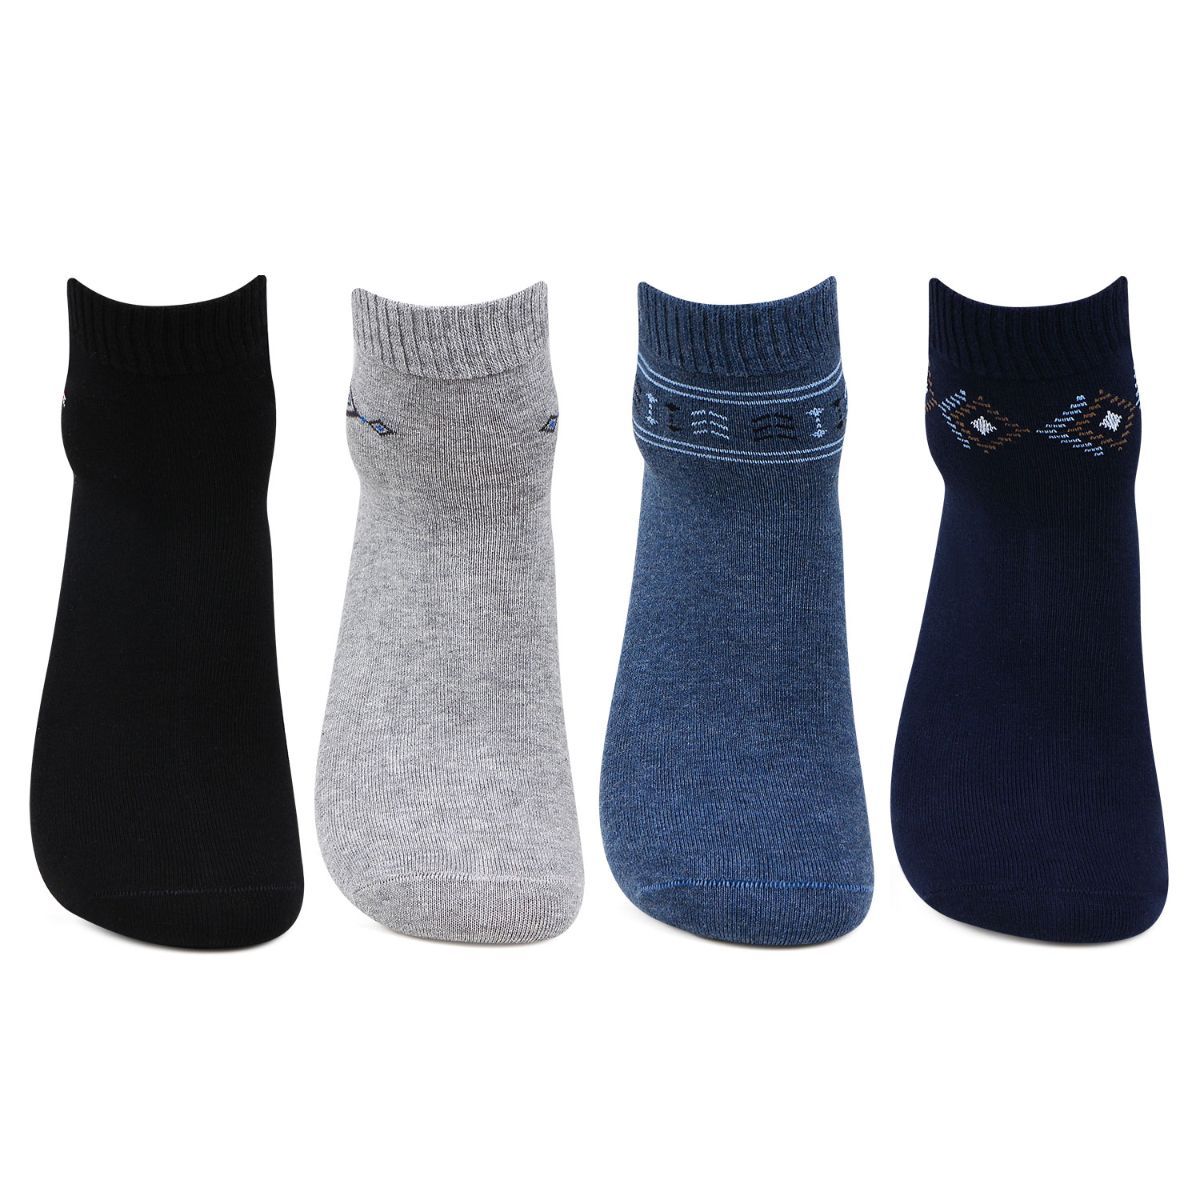 Bonjour Men's Formal Ankle Length Business/office Socks-pack Of 4 - Multi-Color (Free Size)